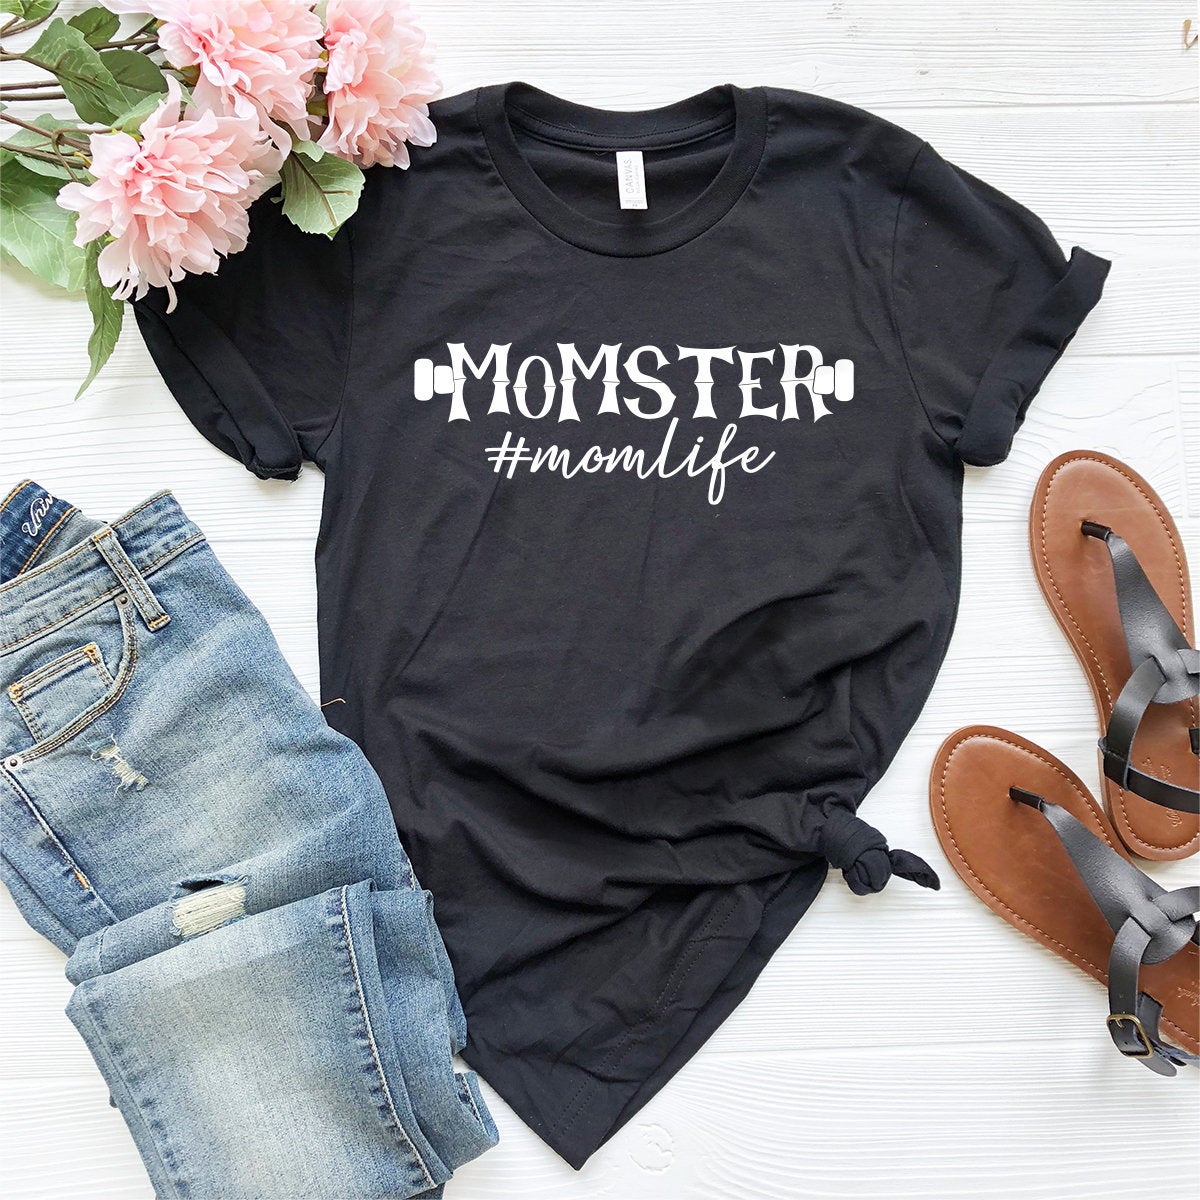 Halloween Mom Shirt, Halloween Momster Shirt, Momster T-Shirt, Funny Halloween Shirt, Mom Life Shirt, Fall Mom Shirt, Womens Halloween Tee - Fastdeliverytees.com